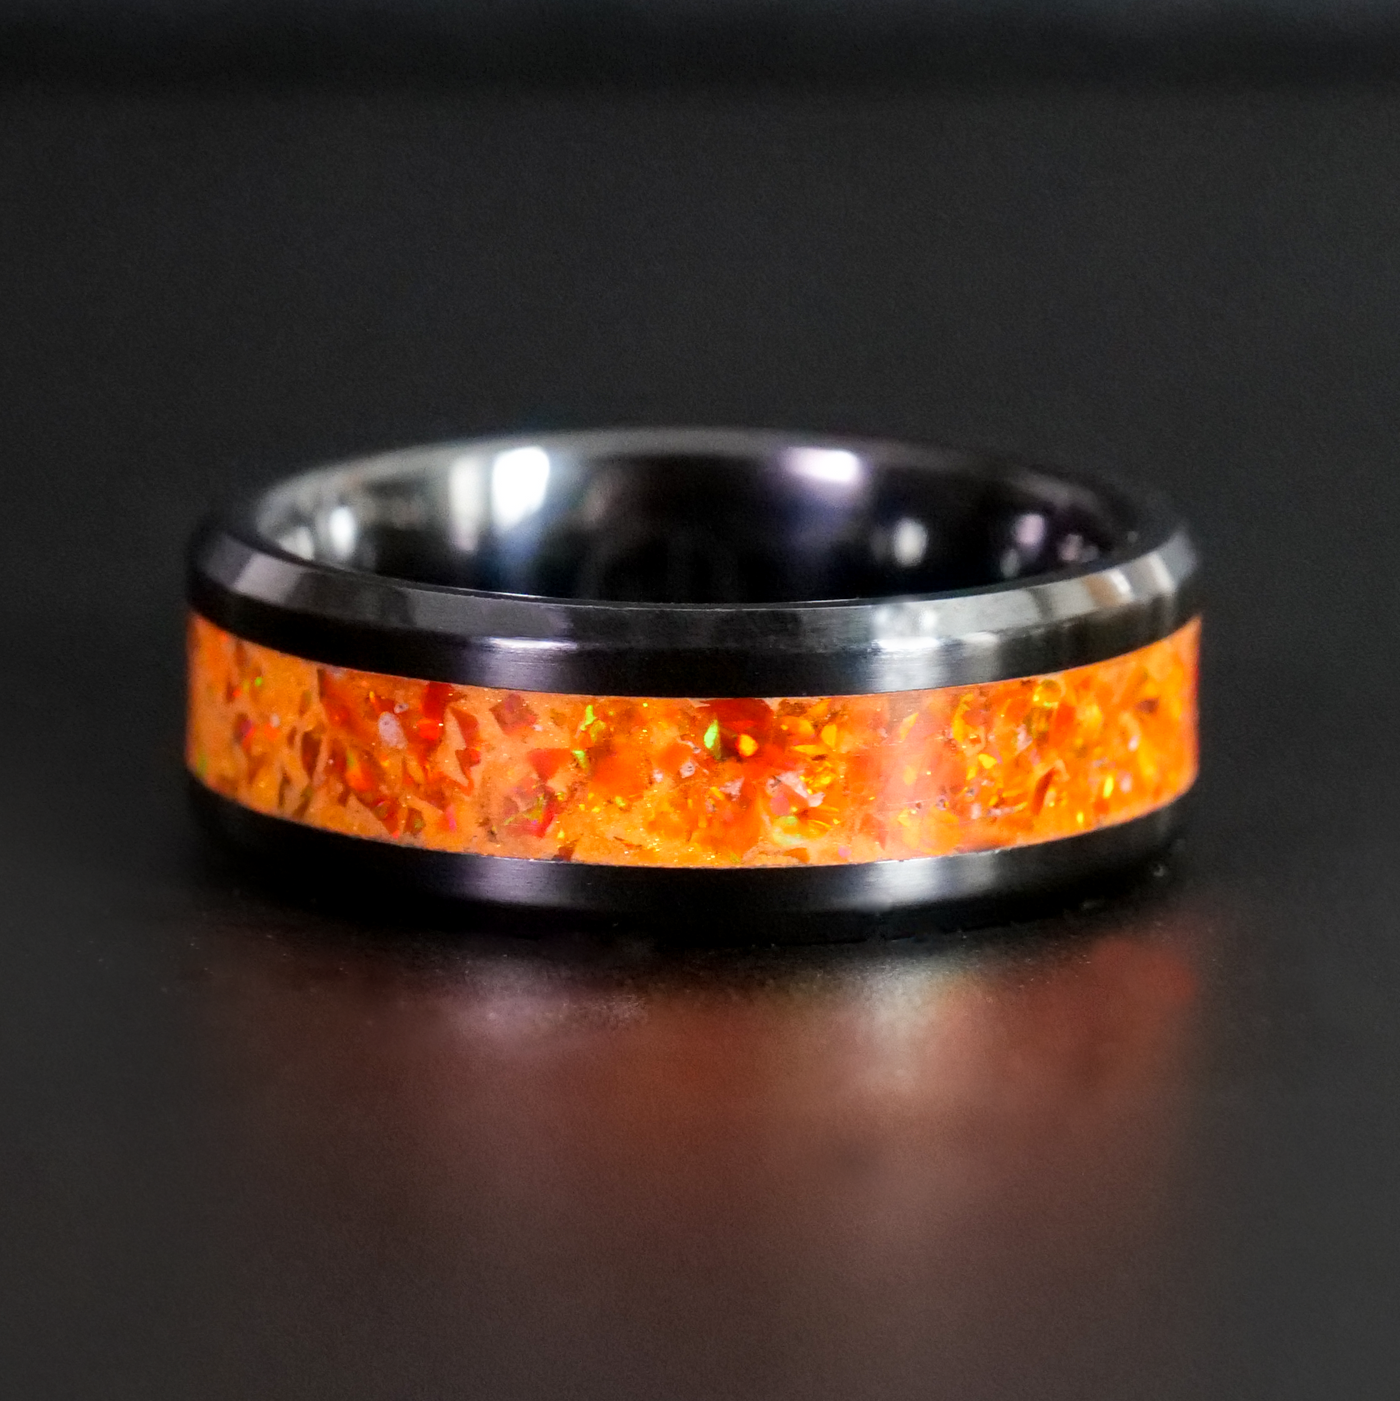 Orange Fire Opal Glowstone Ring - Patrick Adair Designs